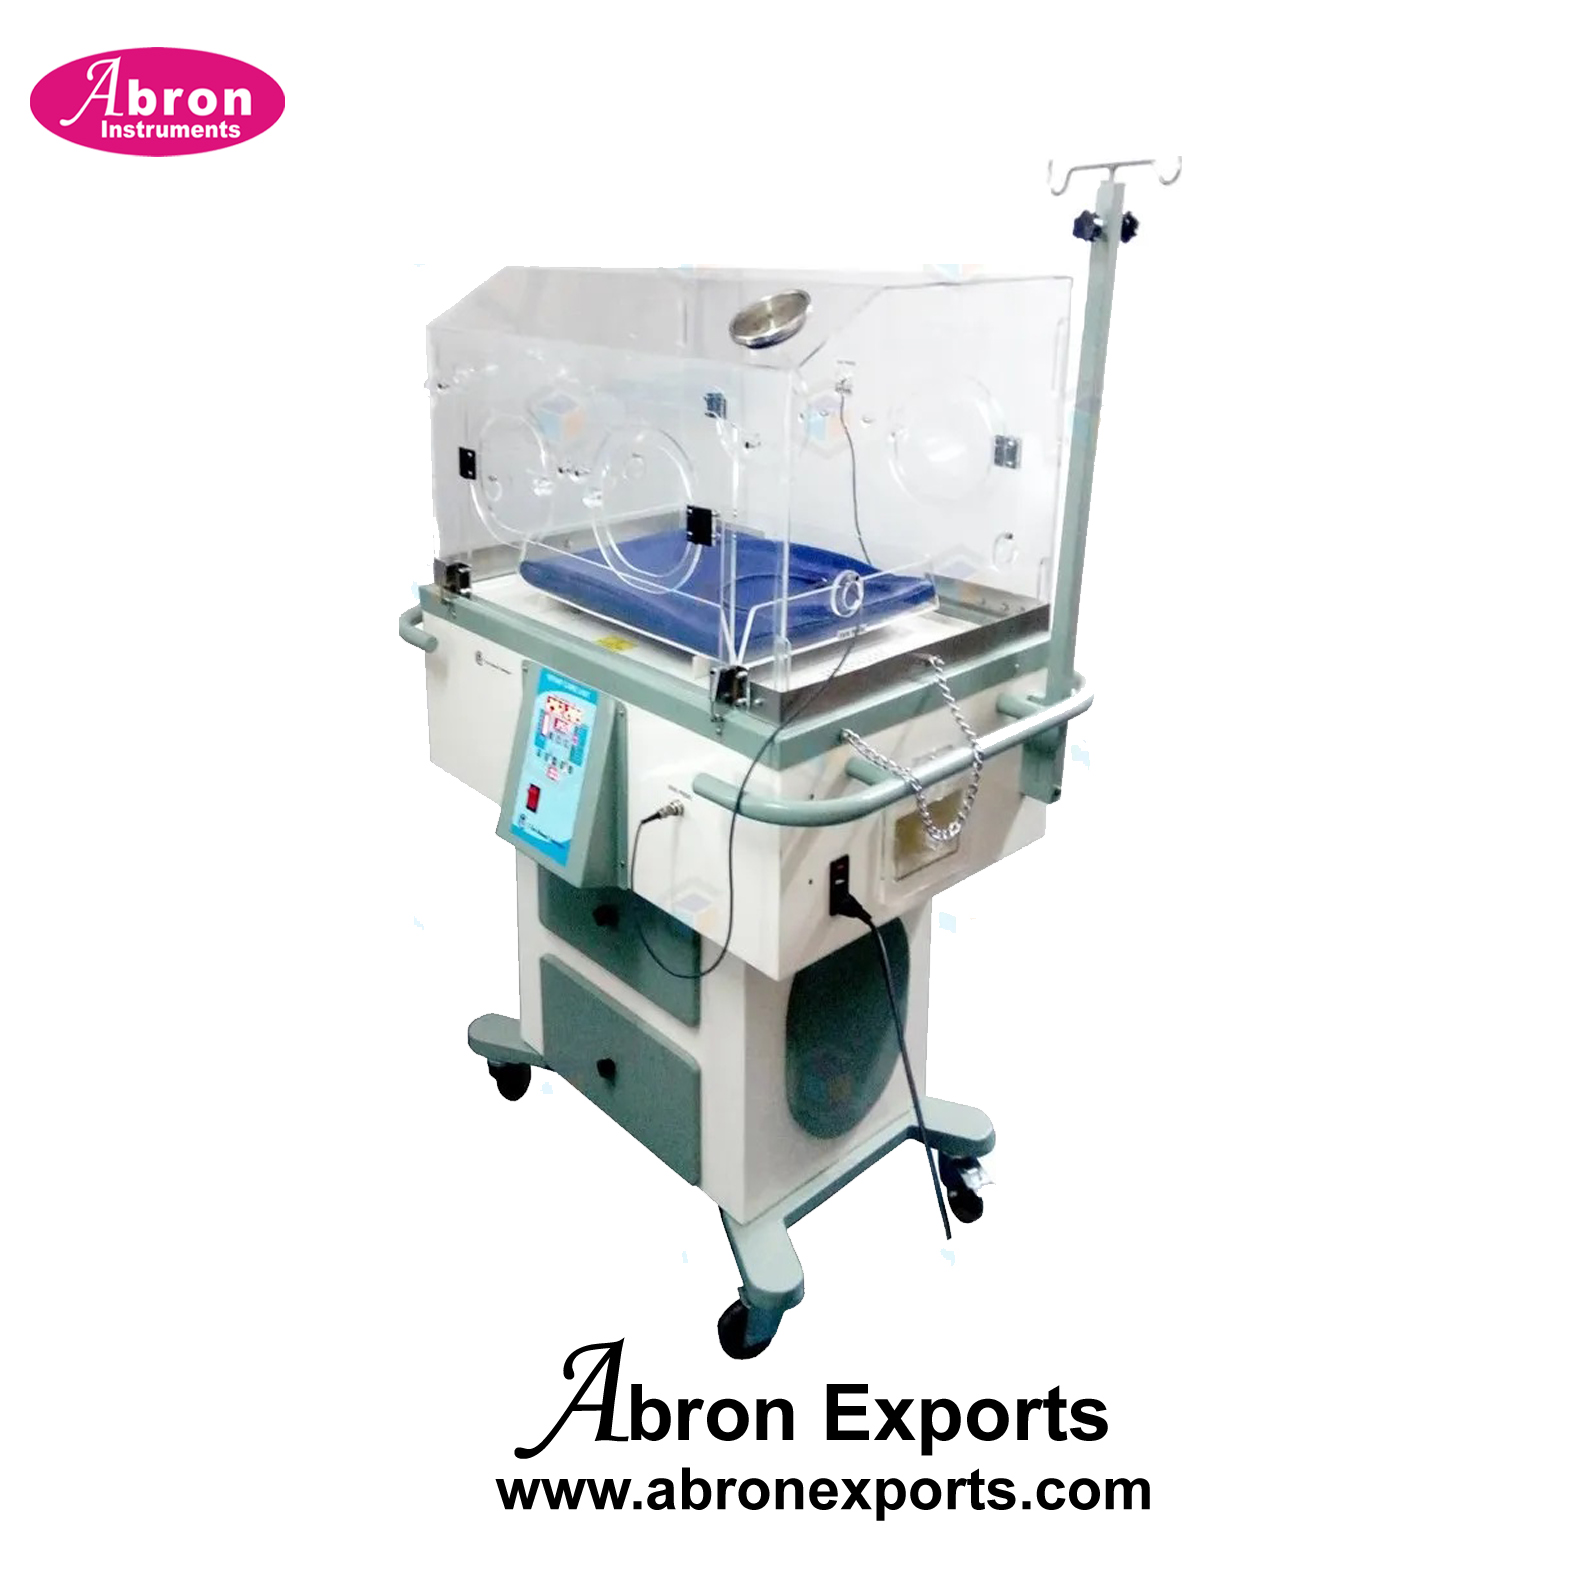 Baby incubators Digital Temperature hopsital Nursing Home Abron ABM-2547D2 